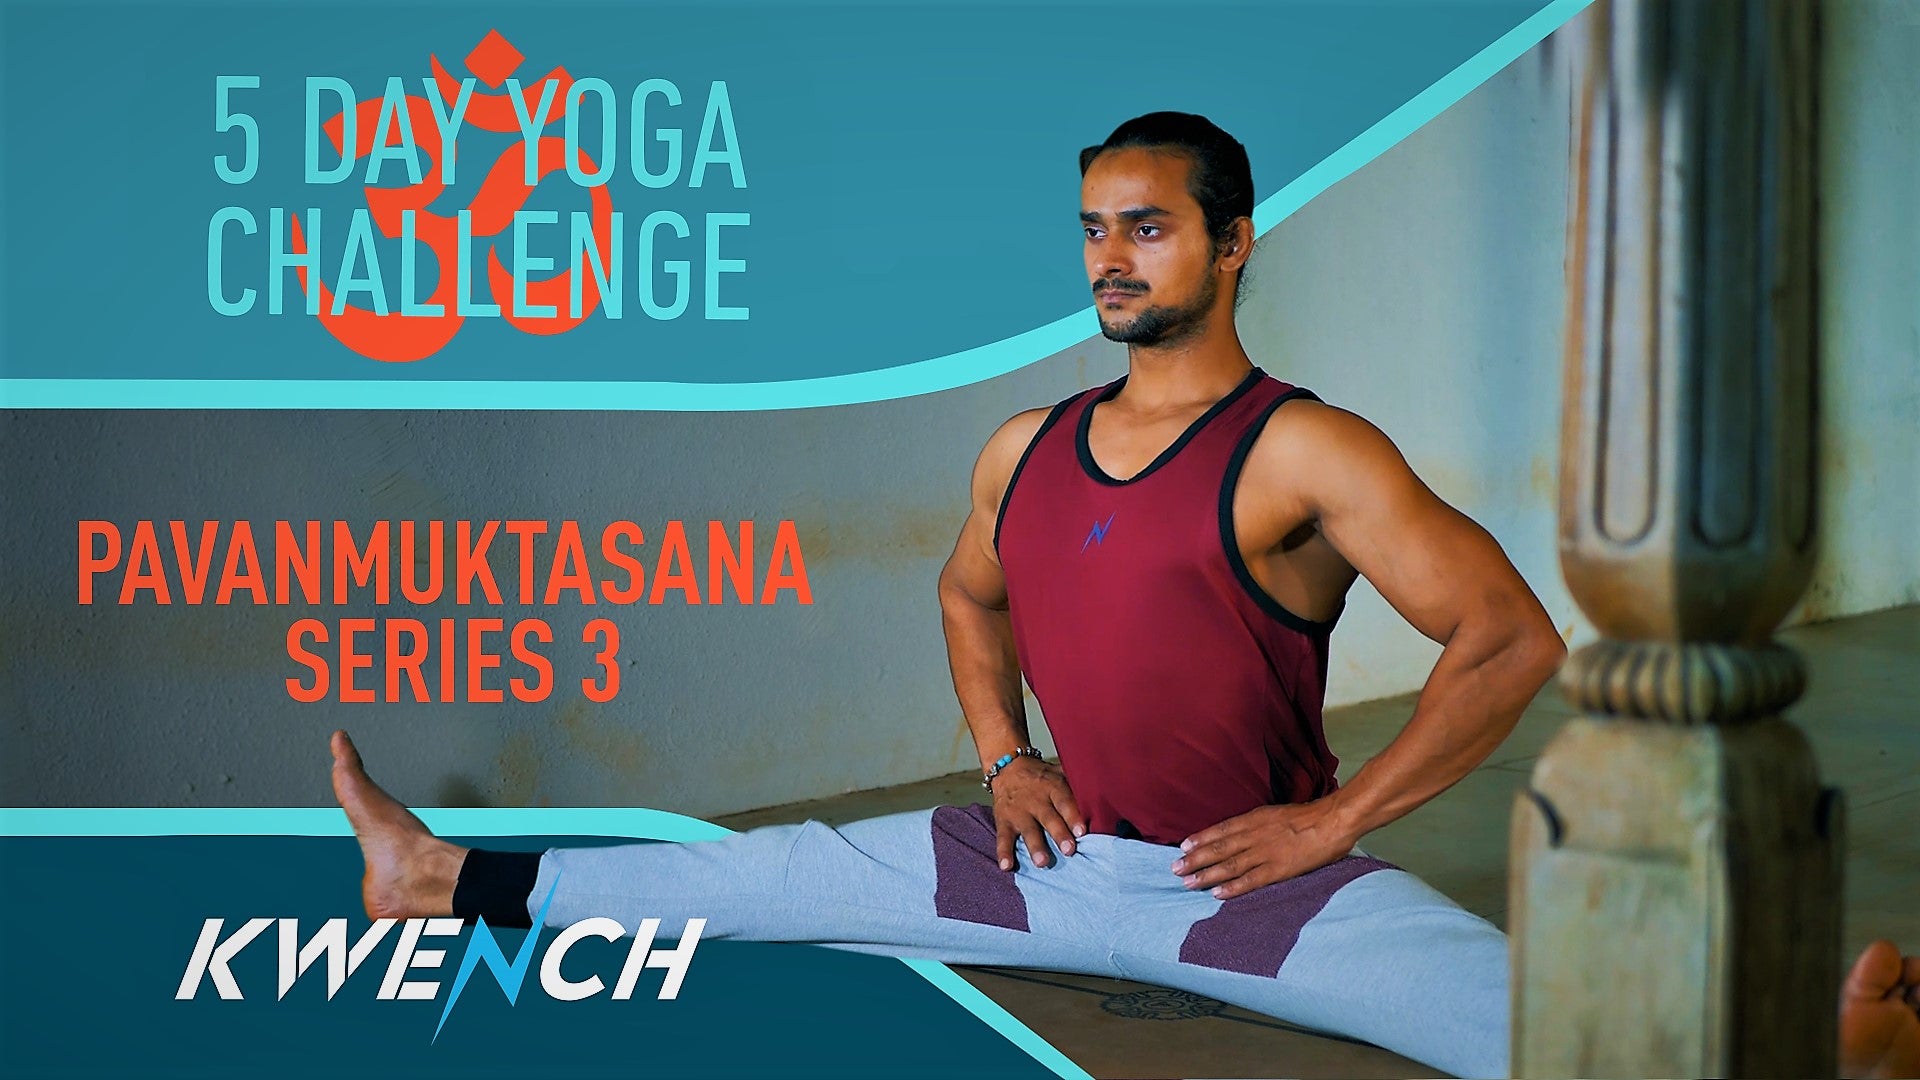 Yoga for beginners - Pavanmuktasana Series 3